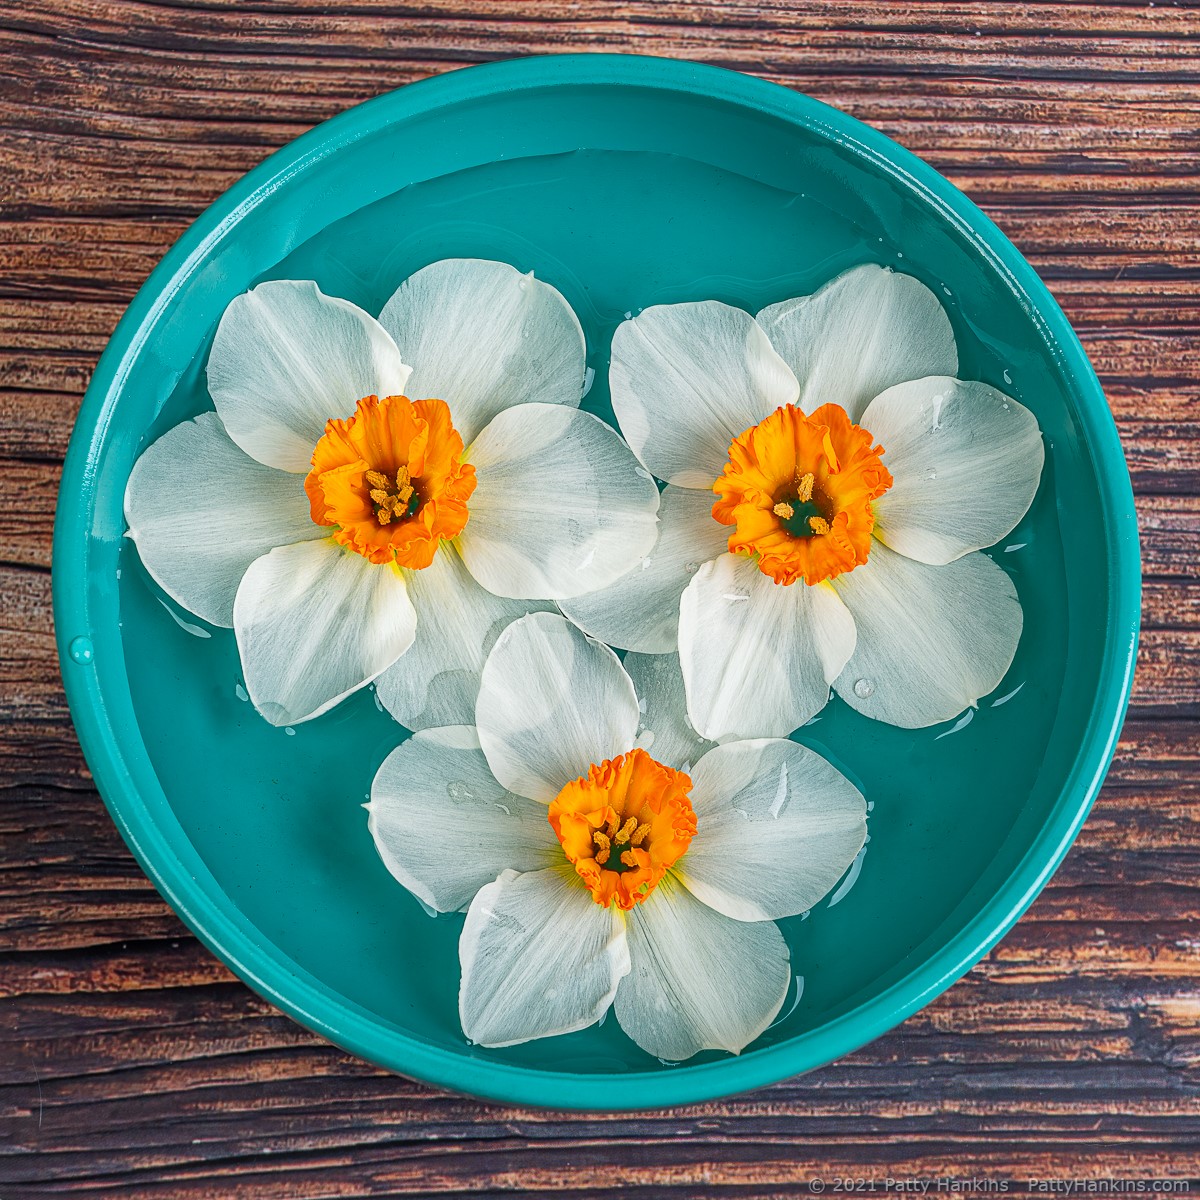 Floating Daffodils © 2021 Patty Hankins